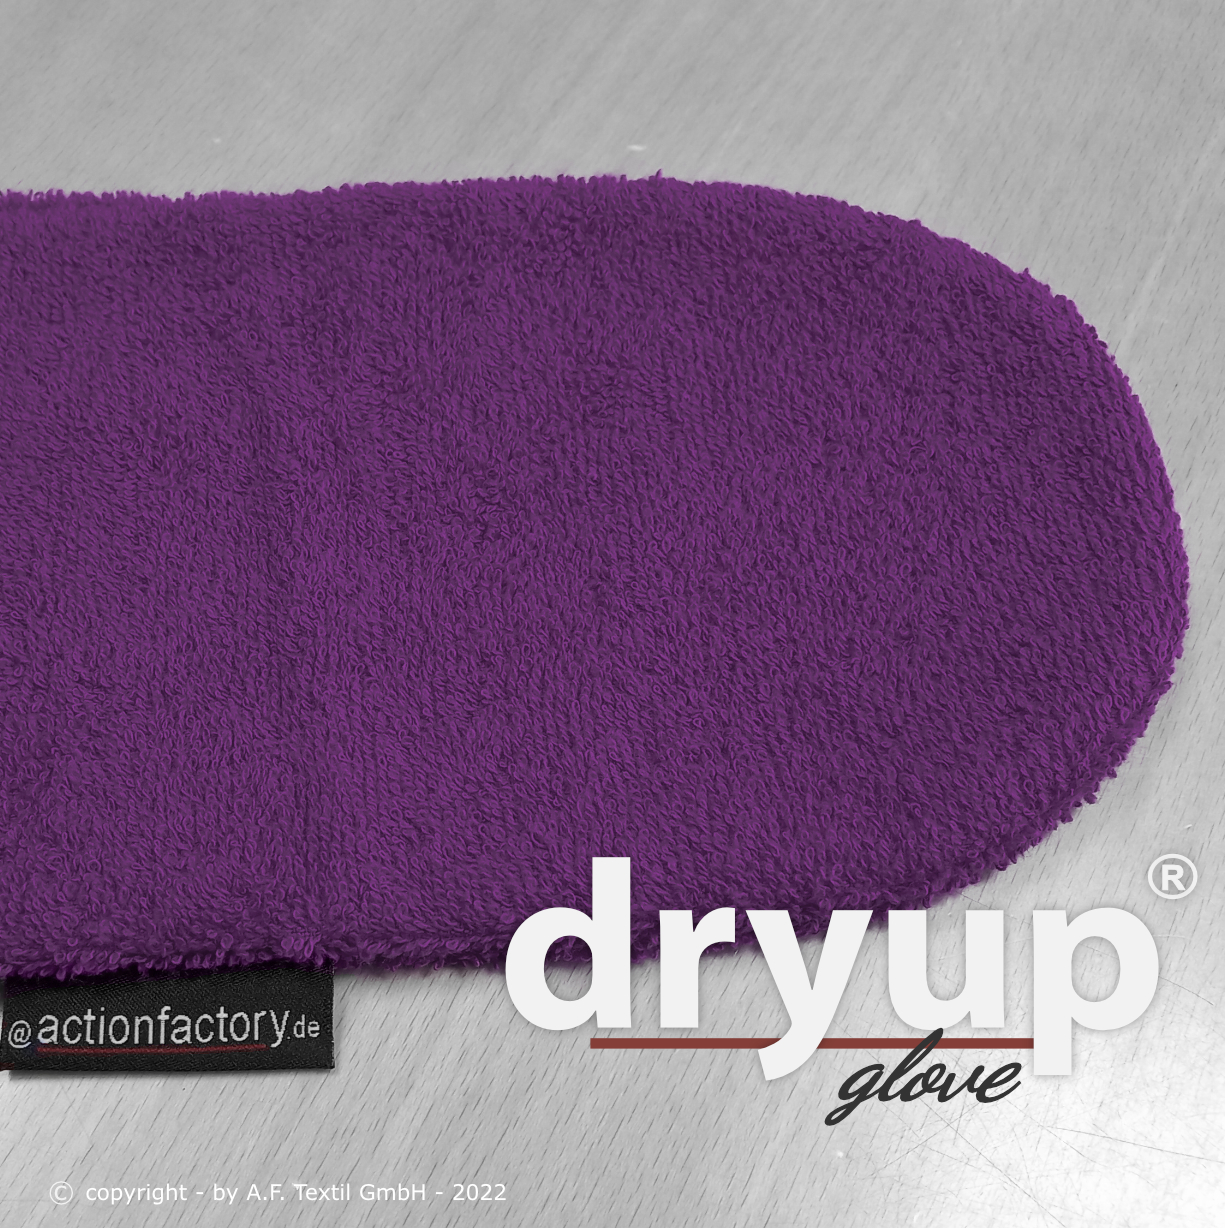 Dryup® glove bilberry